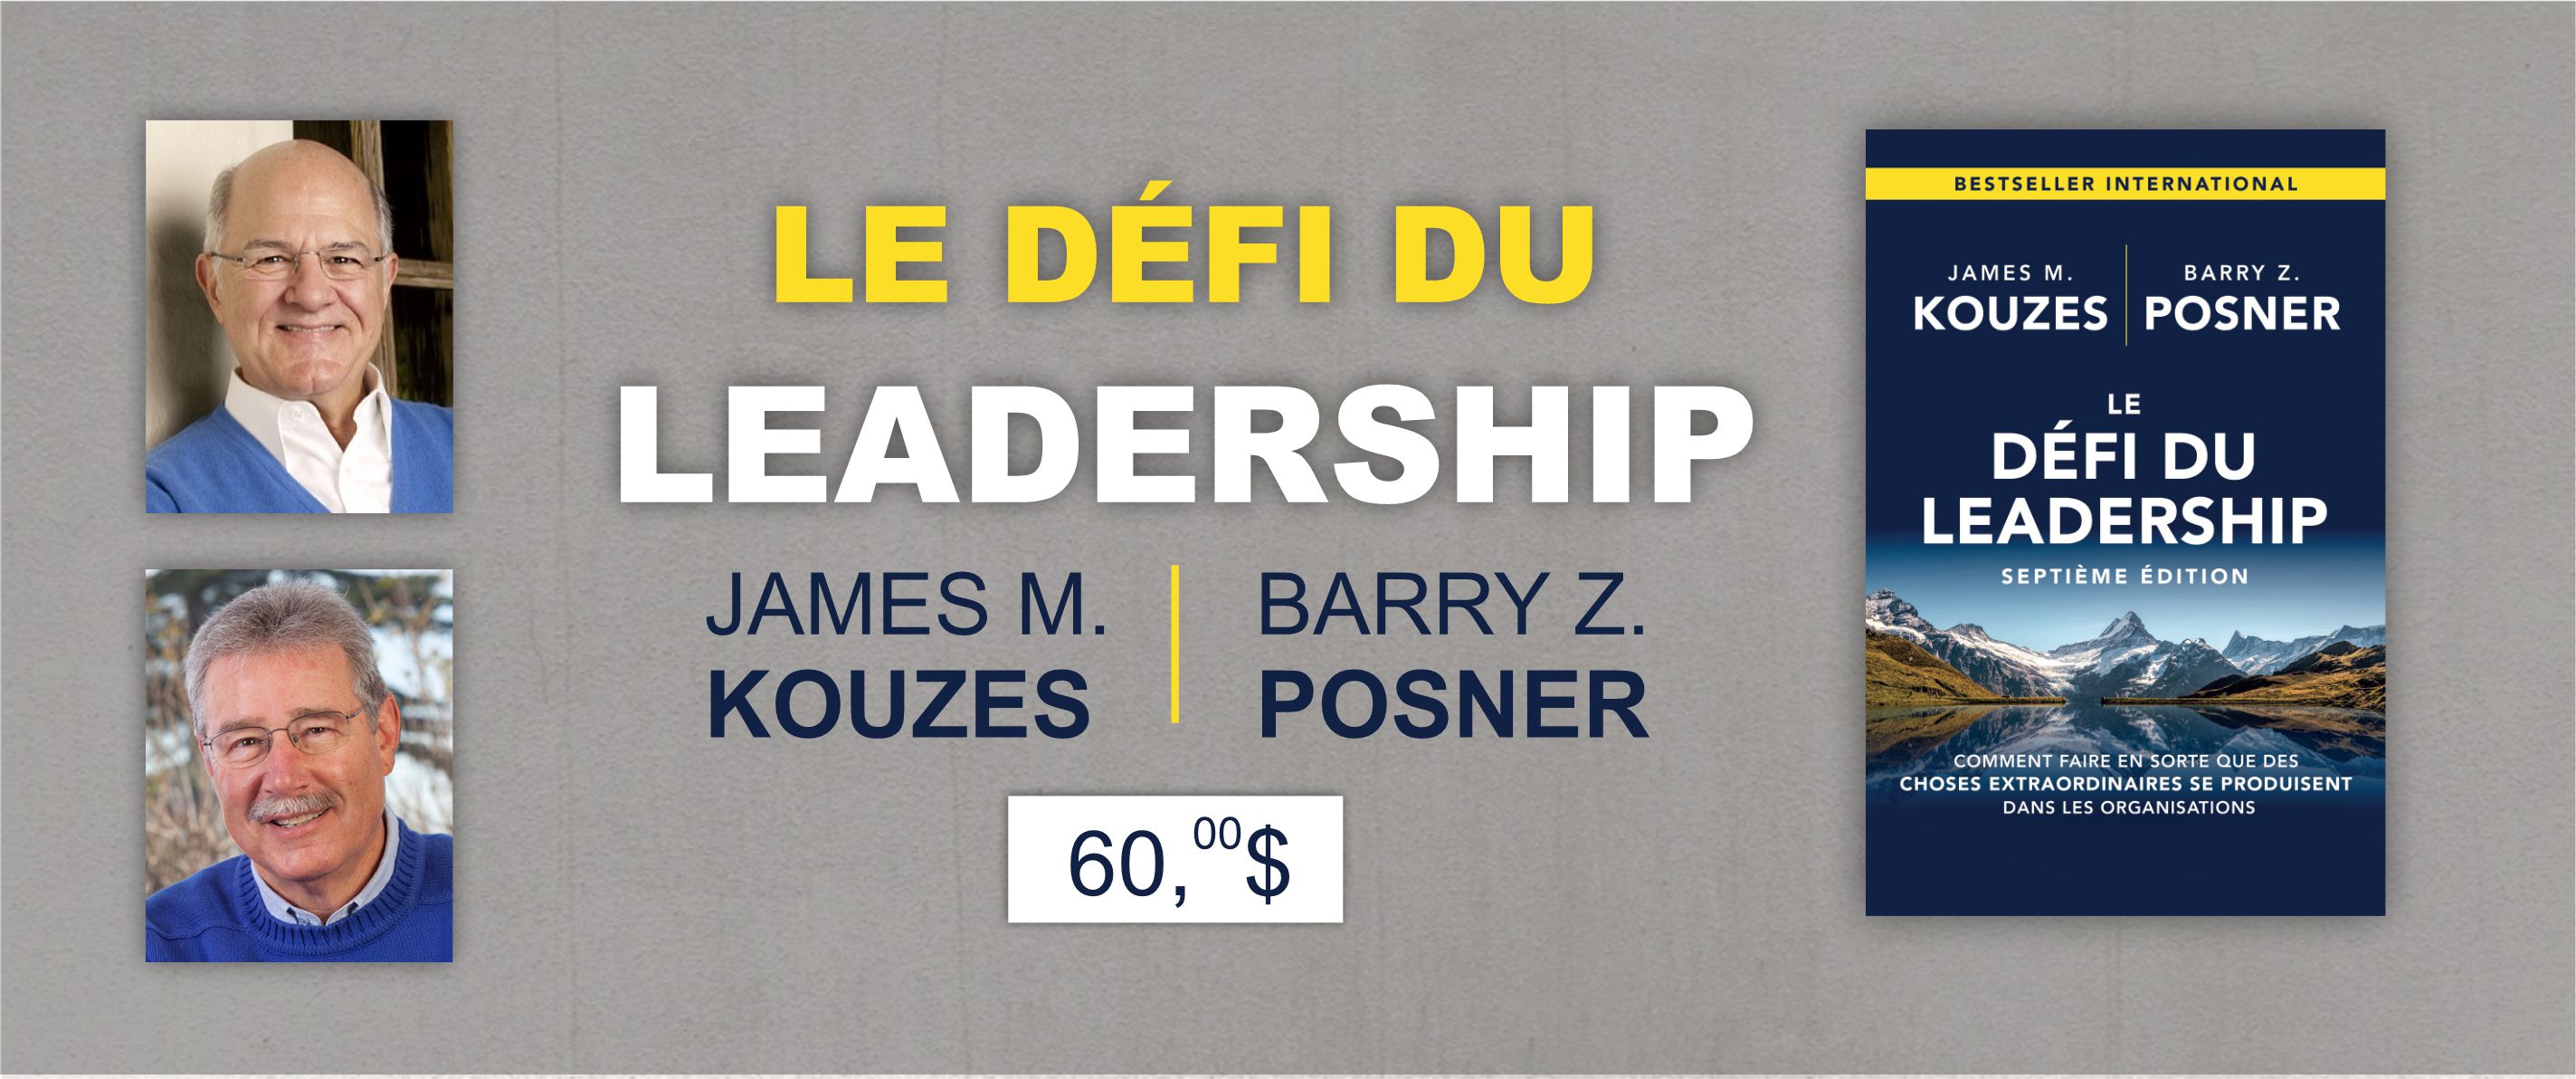 Bannire_dfi_du_leadership